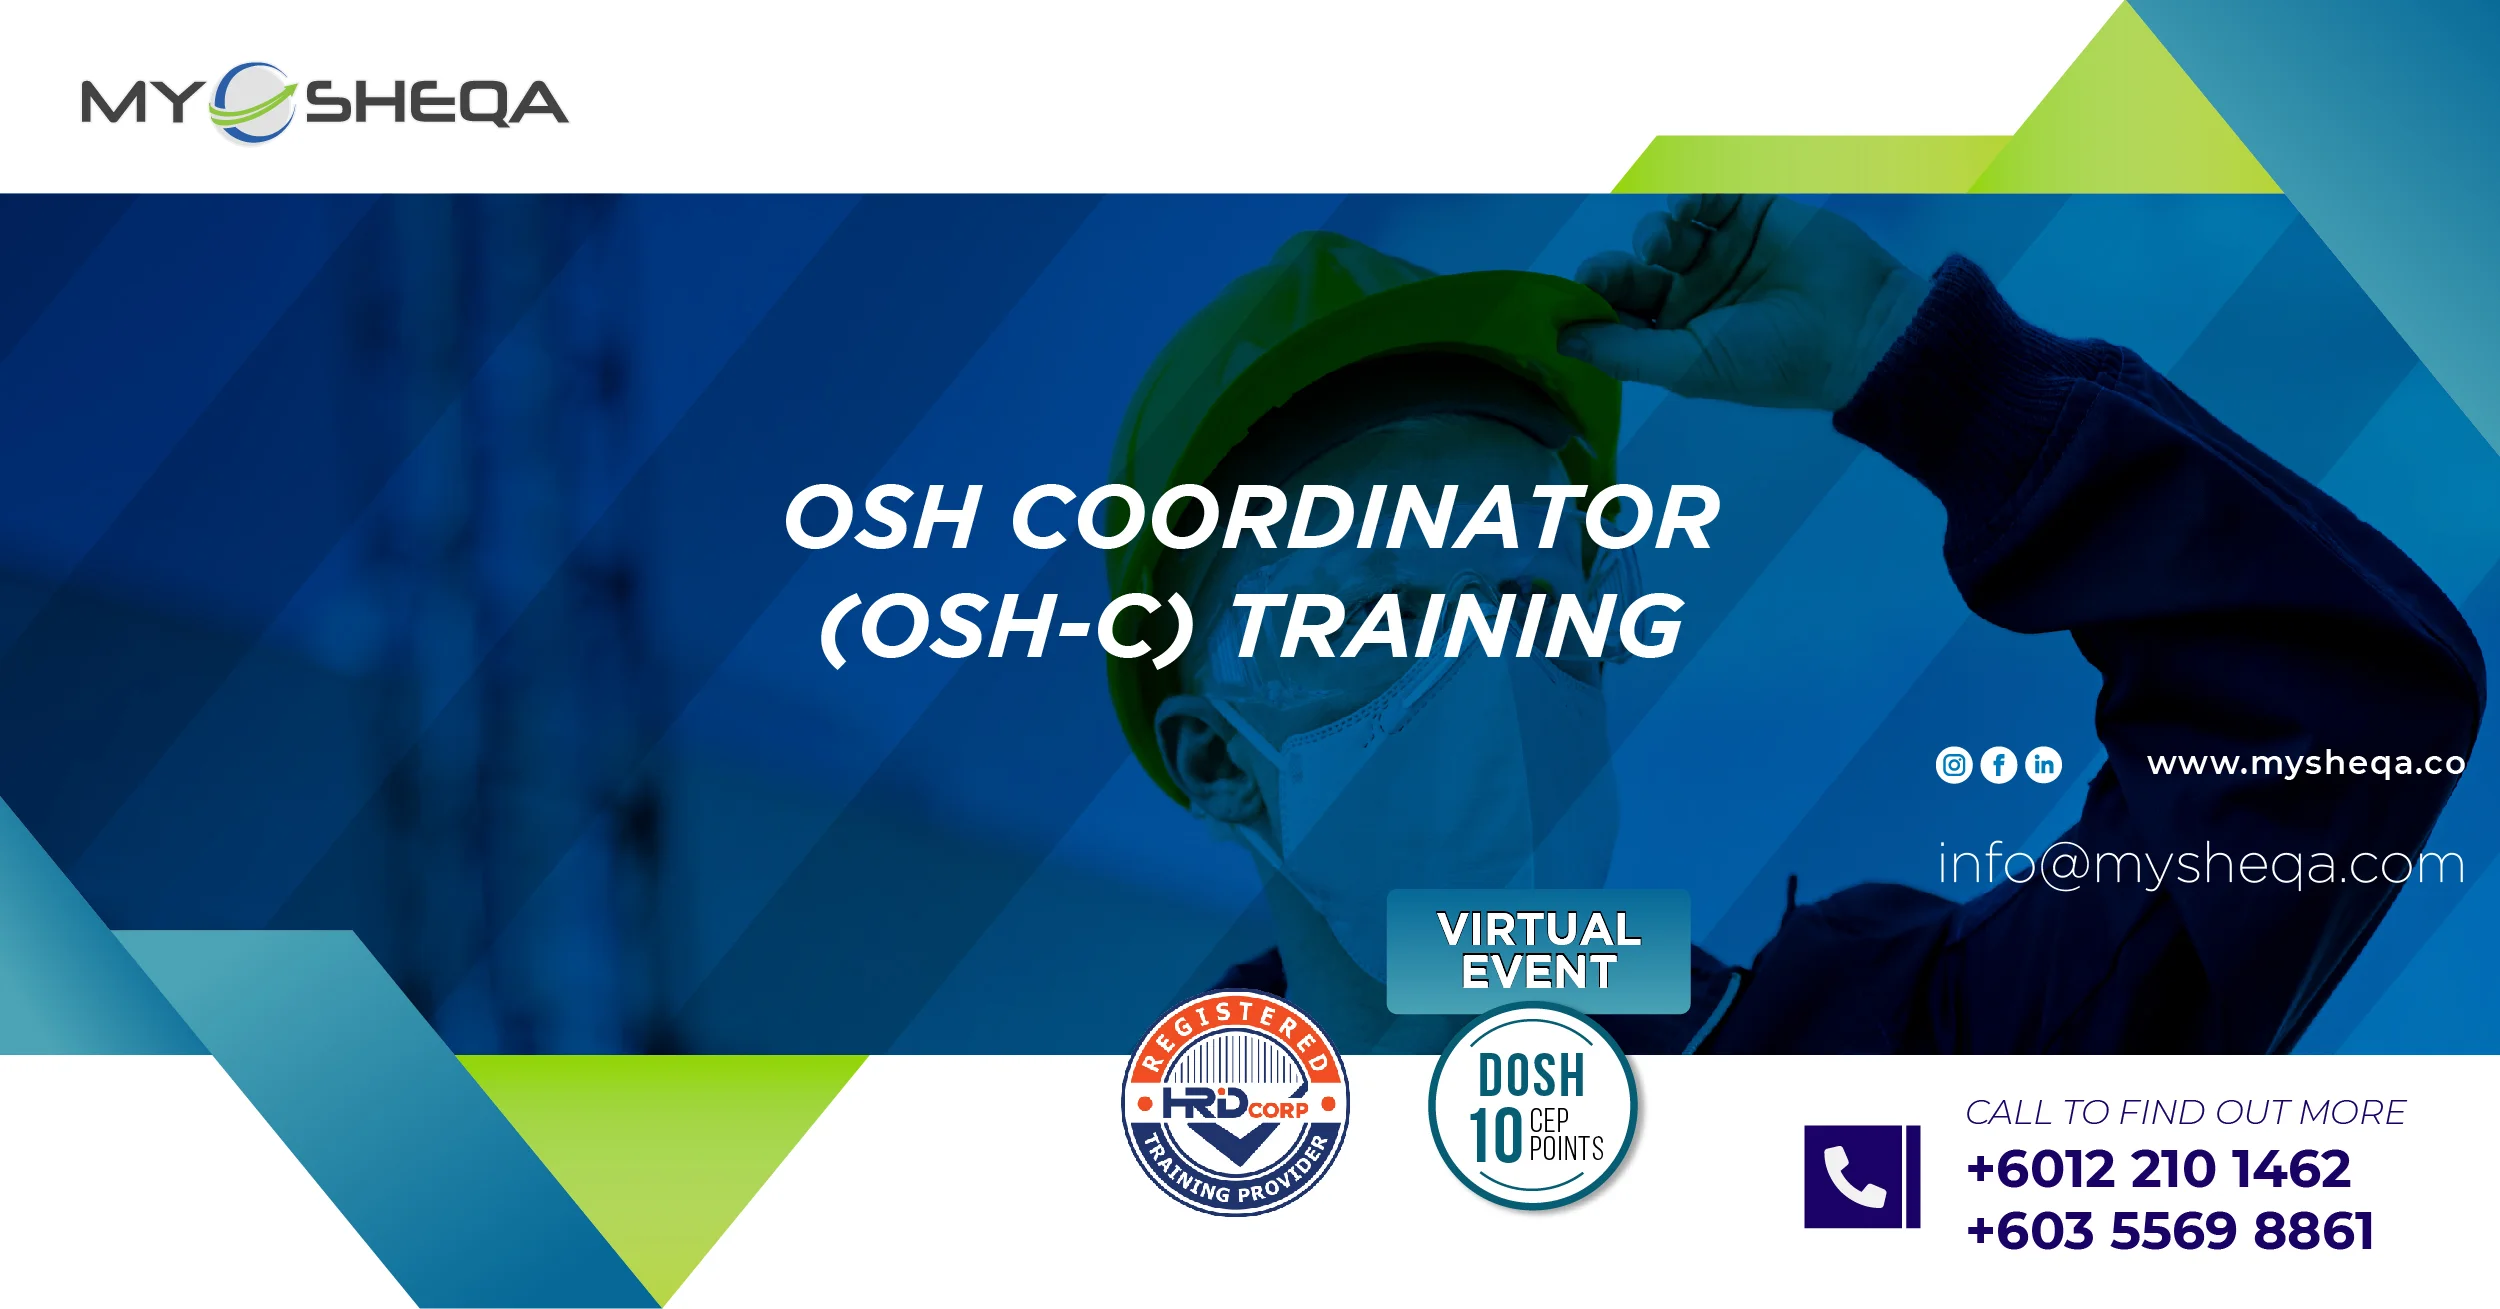 OSH Coordinator (OSH-C) training